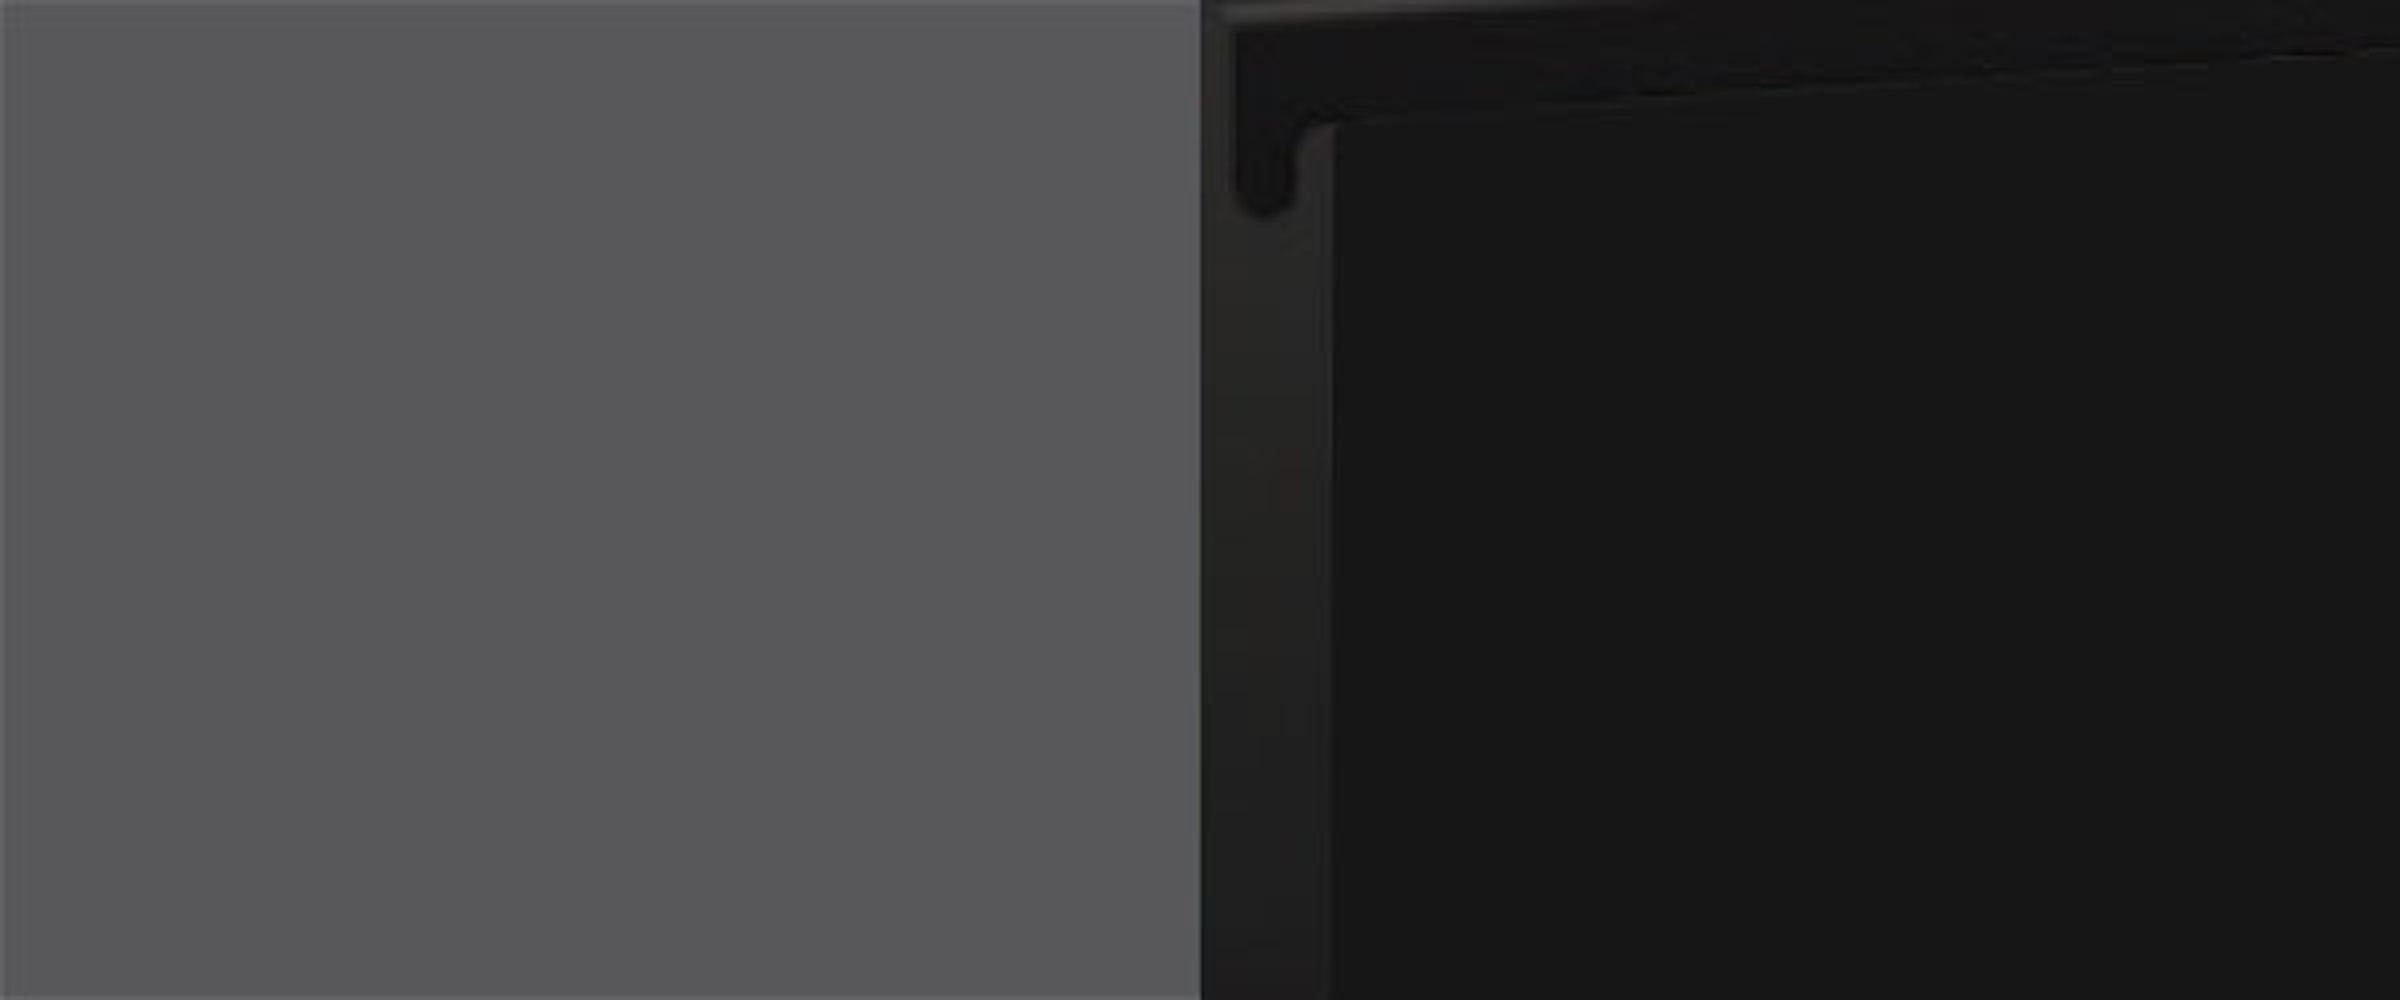 45cm Sockelblende grifflos super Feldmann-Wohnen und Sockelfarbe vollintegriert Front- wählbar Velden, matt schwarz